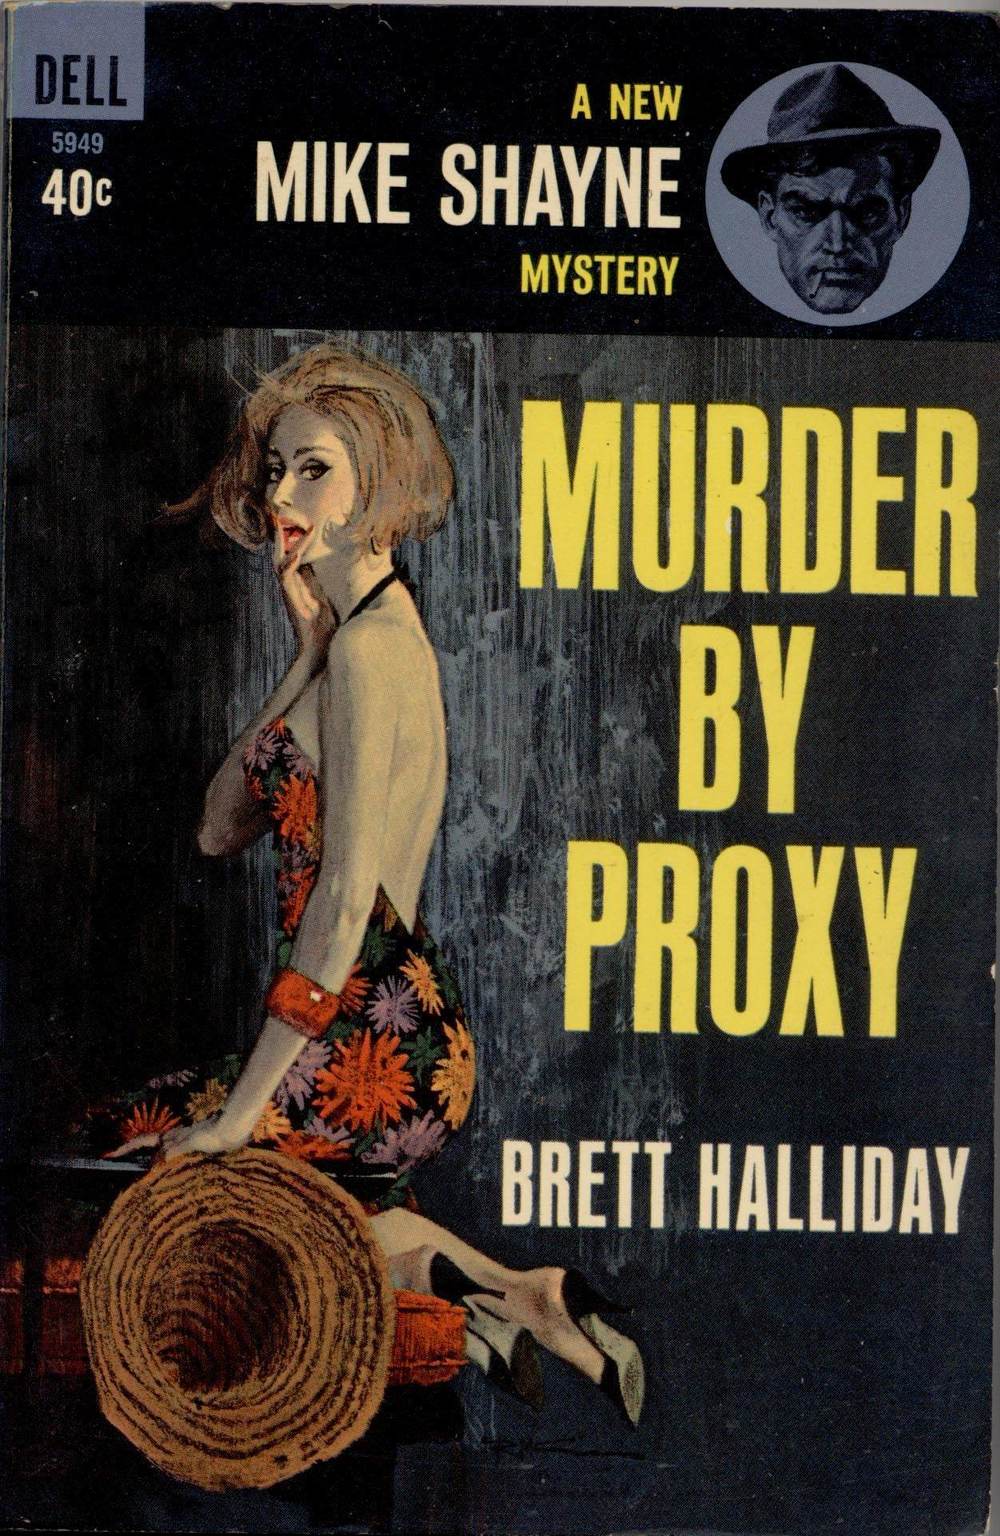 1963-Murder-by-Proxy-by-Brett-Halliday.-Cover-art-by-Robert-McGinnis.jpg